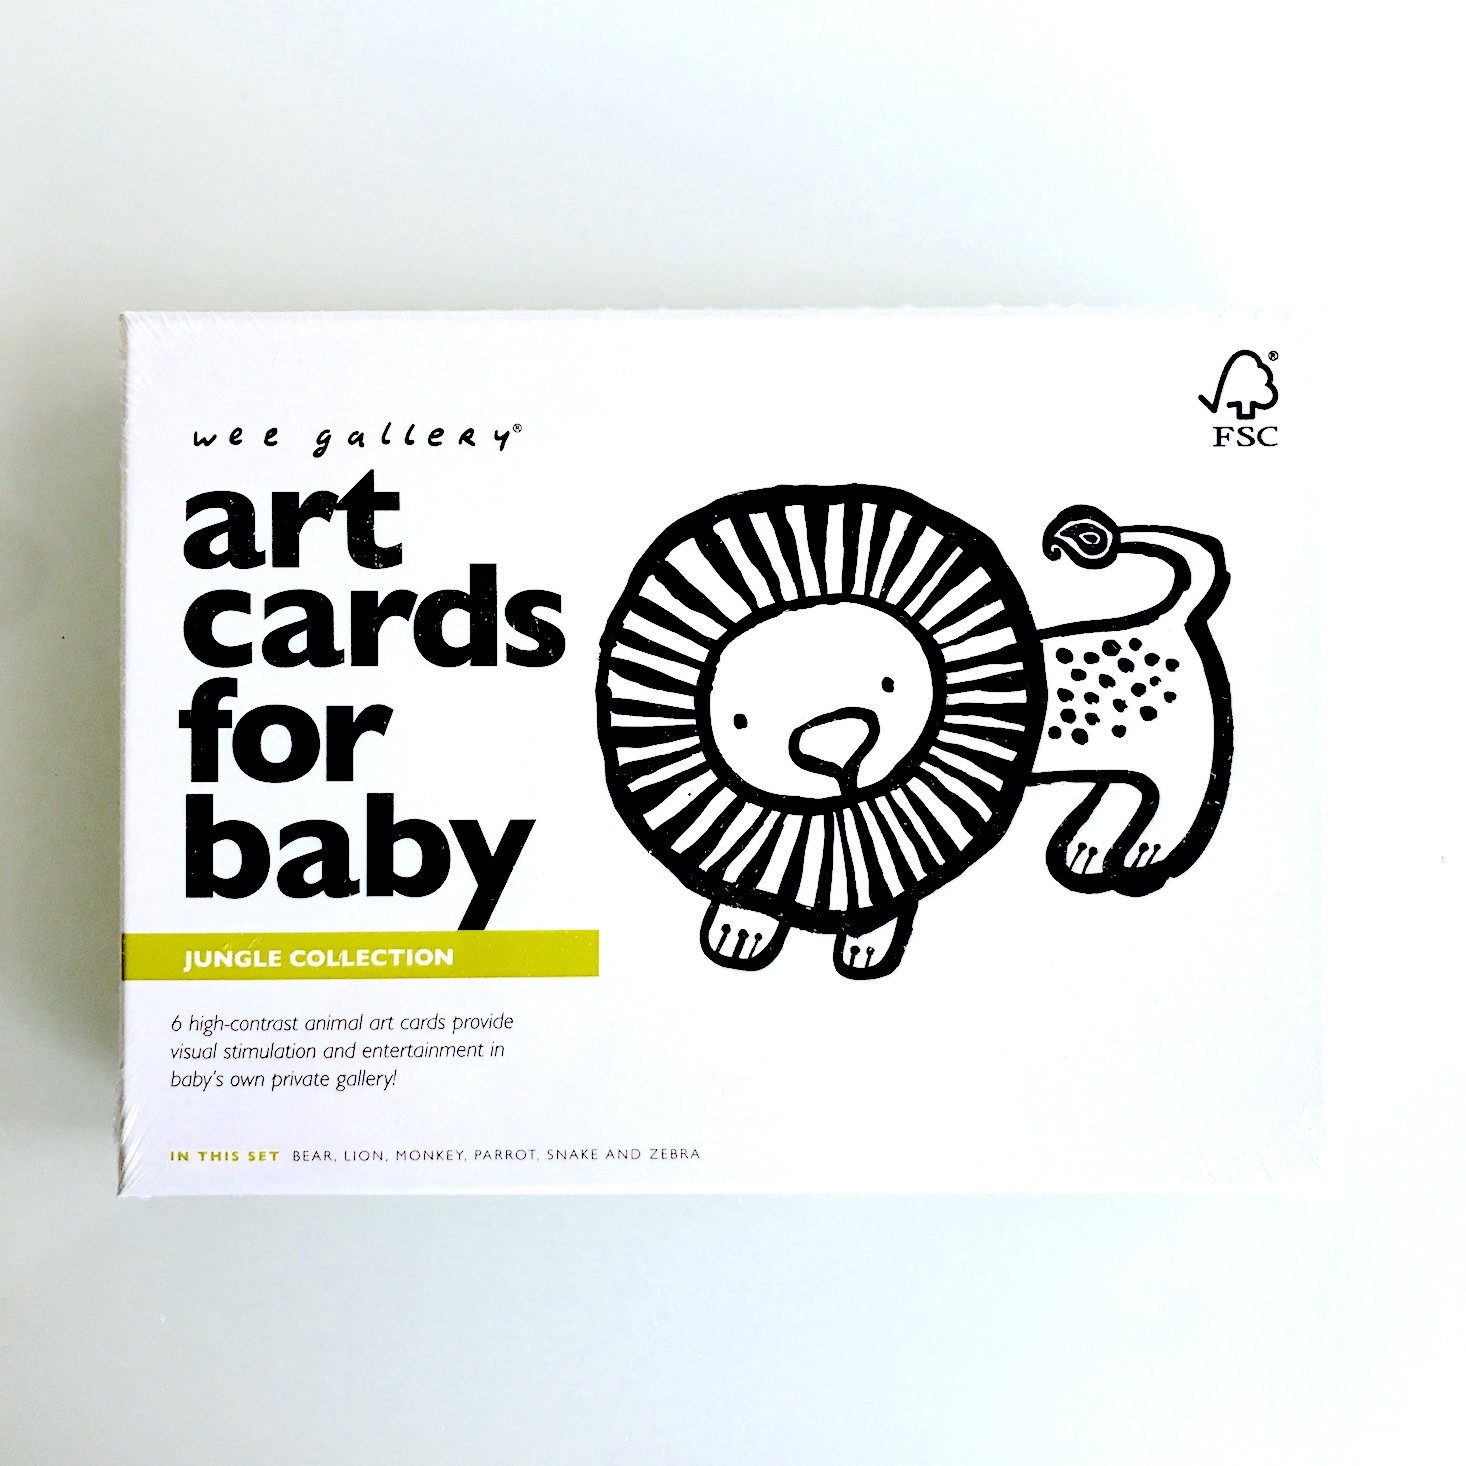 Healthiest Baby 21 Bundles Healthiest Baby January 2018 art cards